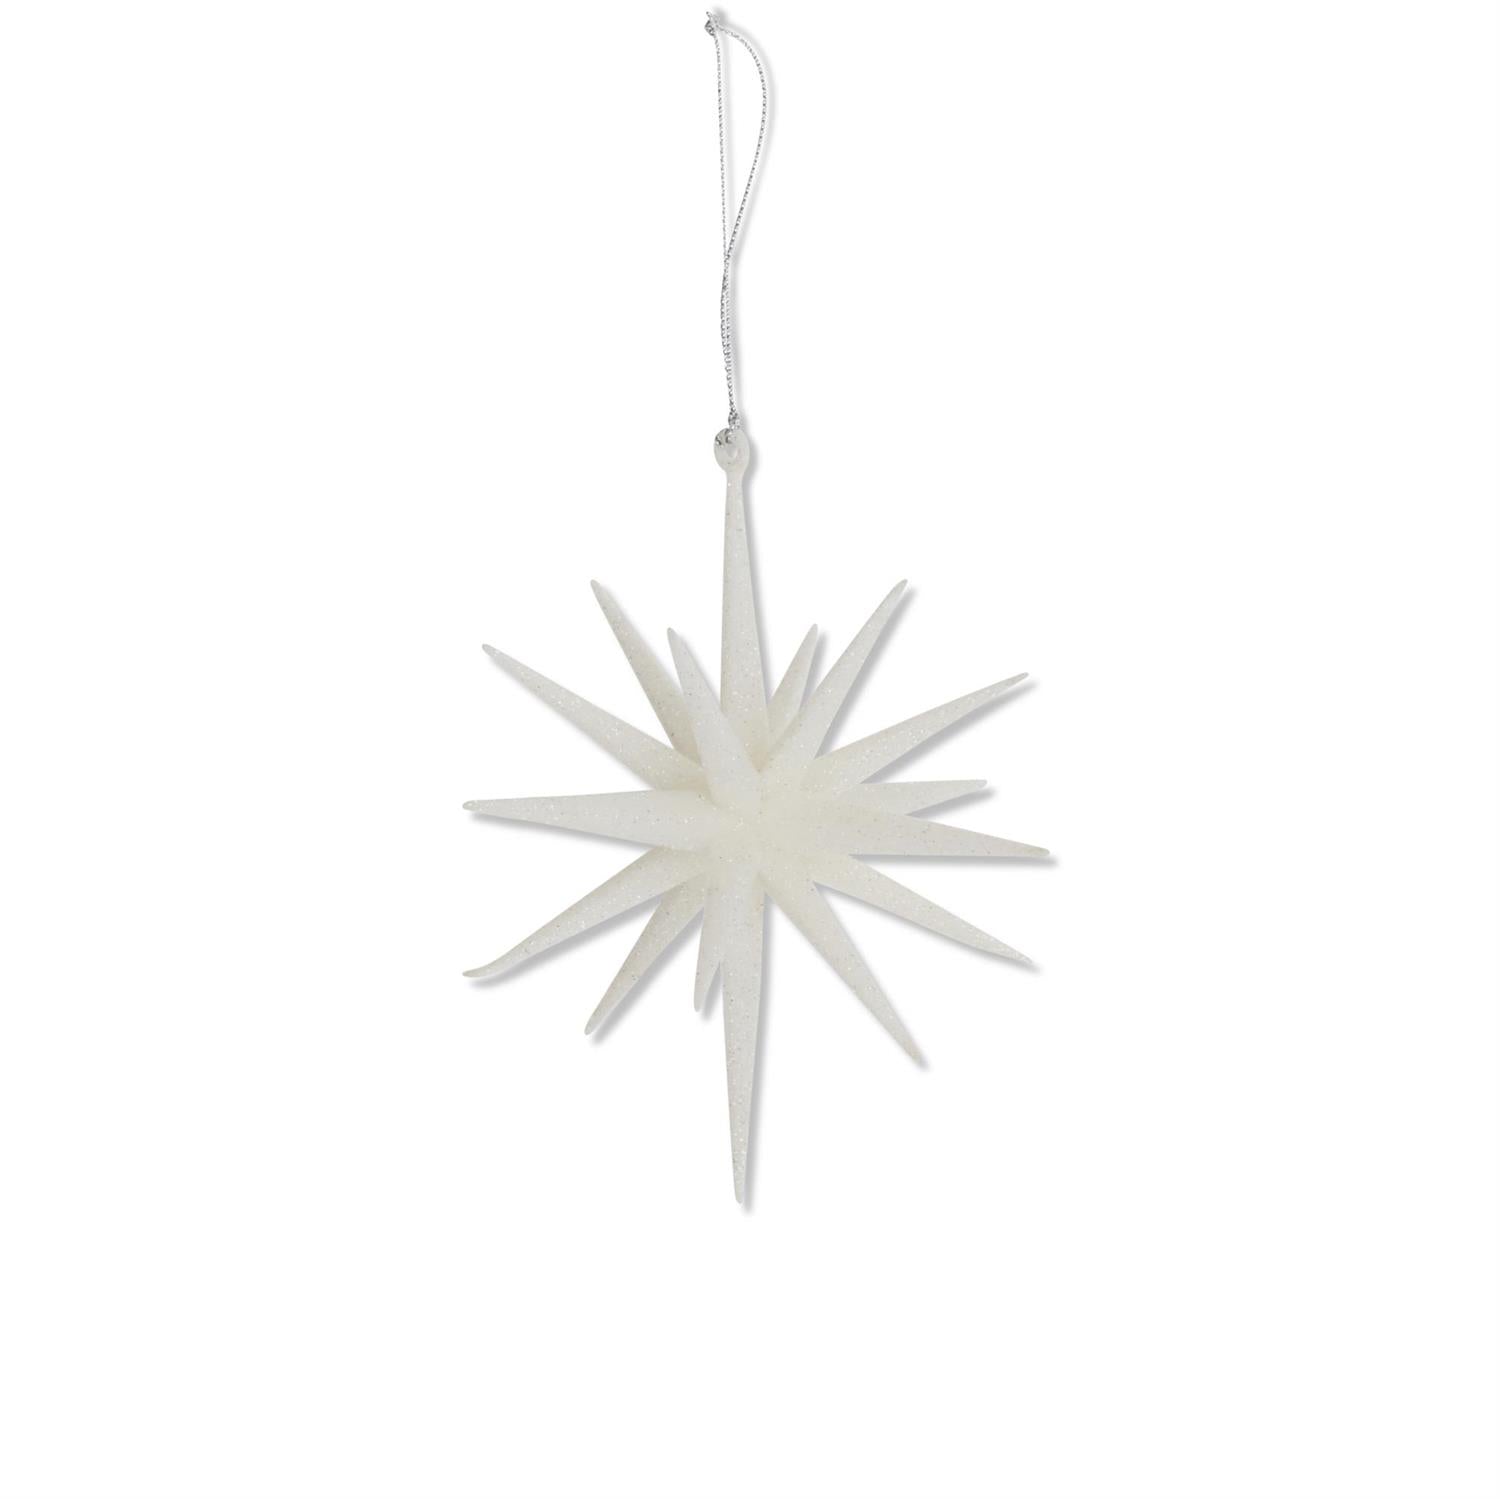 Large Glitter Star Ornament - 6" (White or Gold) - DiamondVale